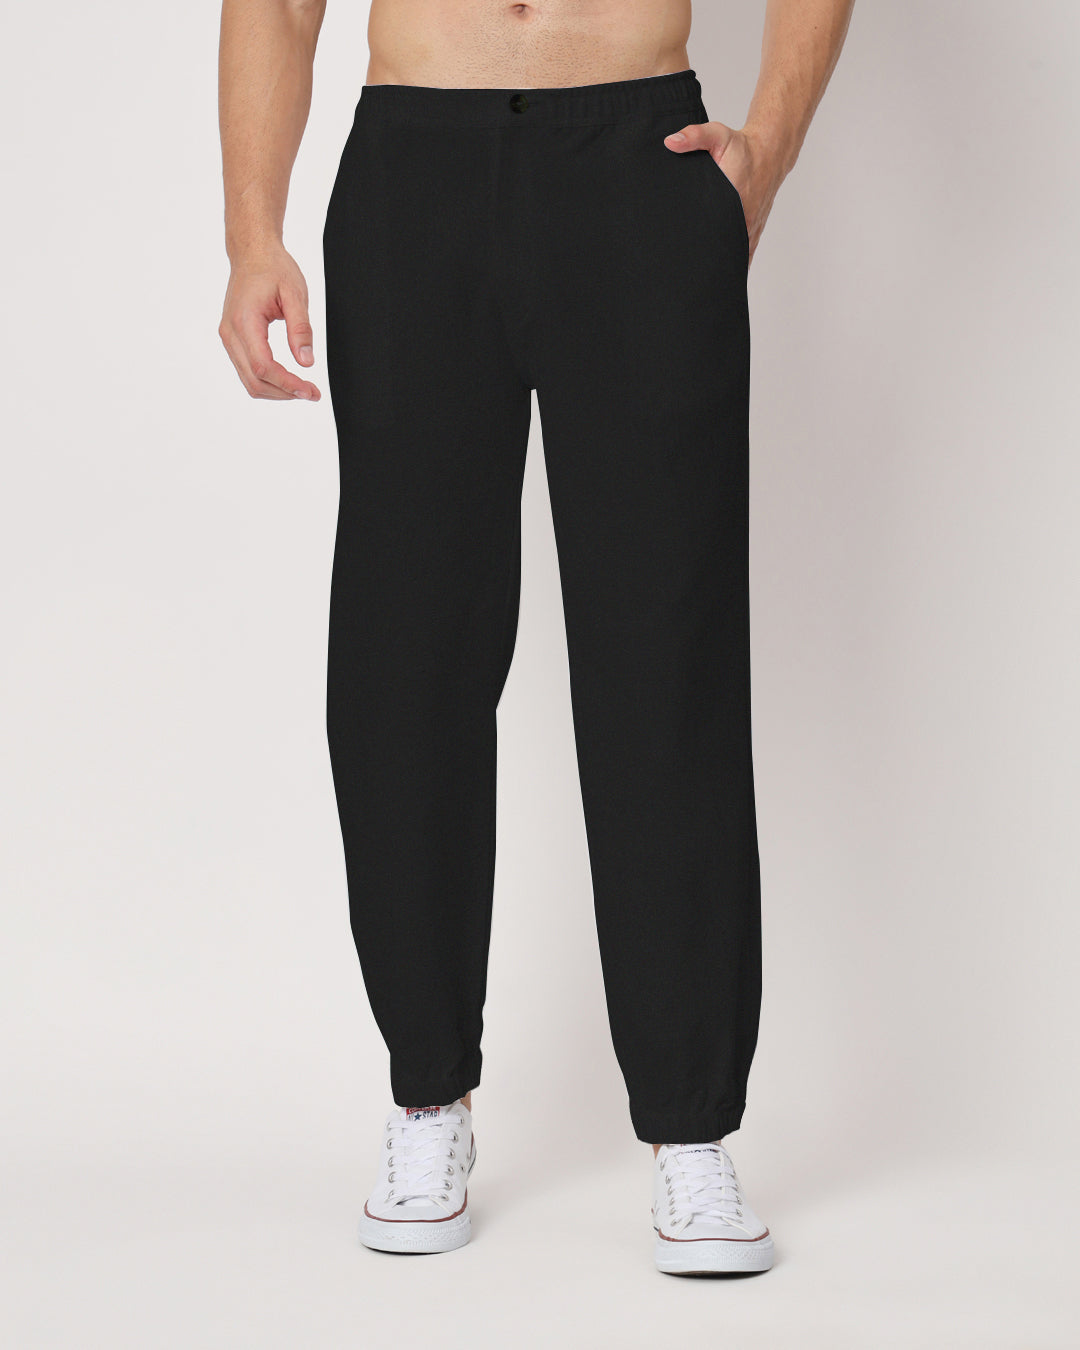 Combo: Black & Grey Jog Men's Pants - Set of 2